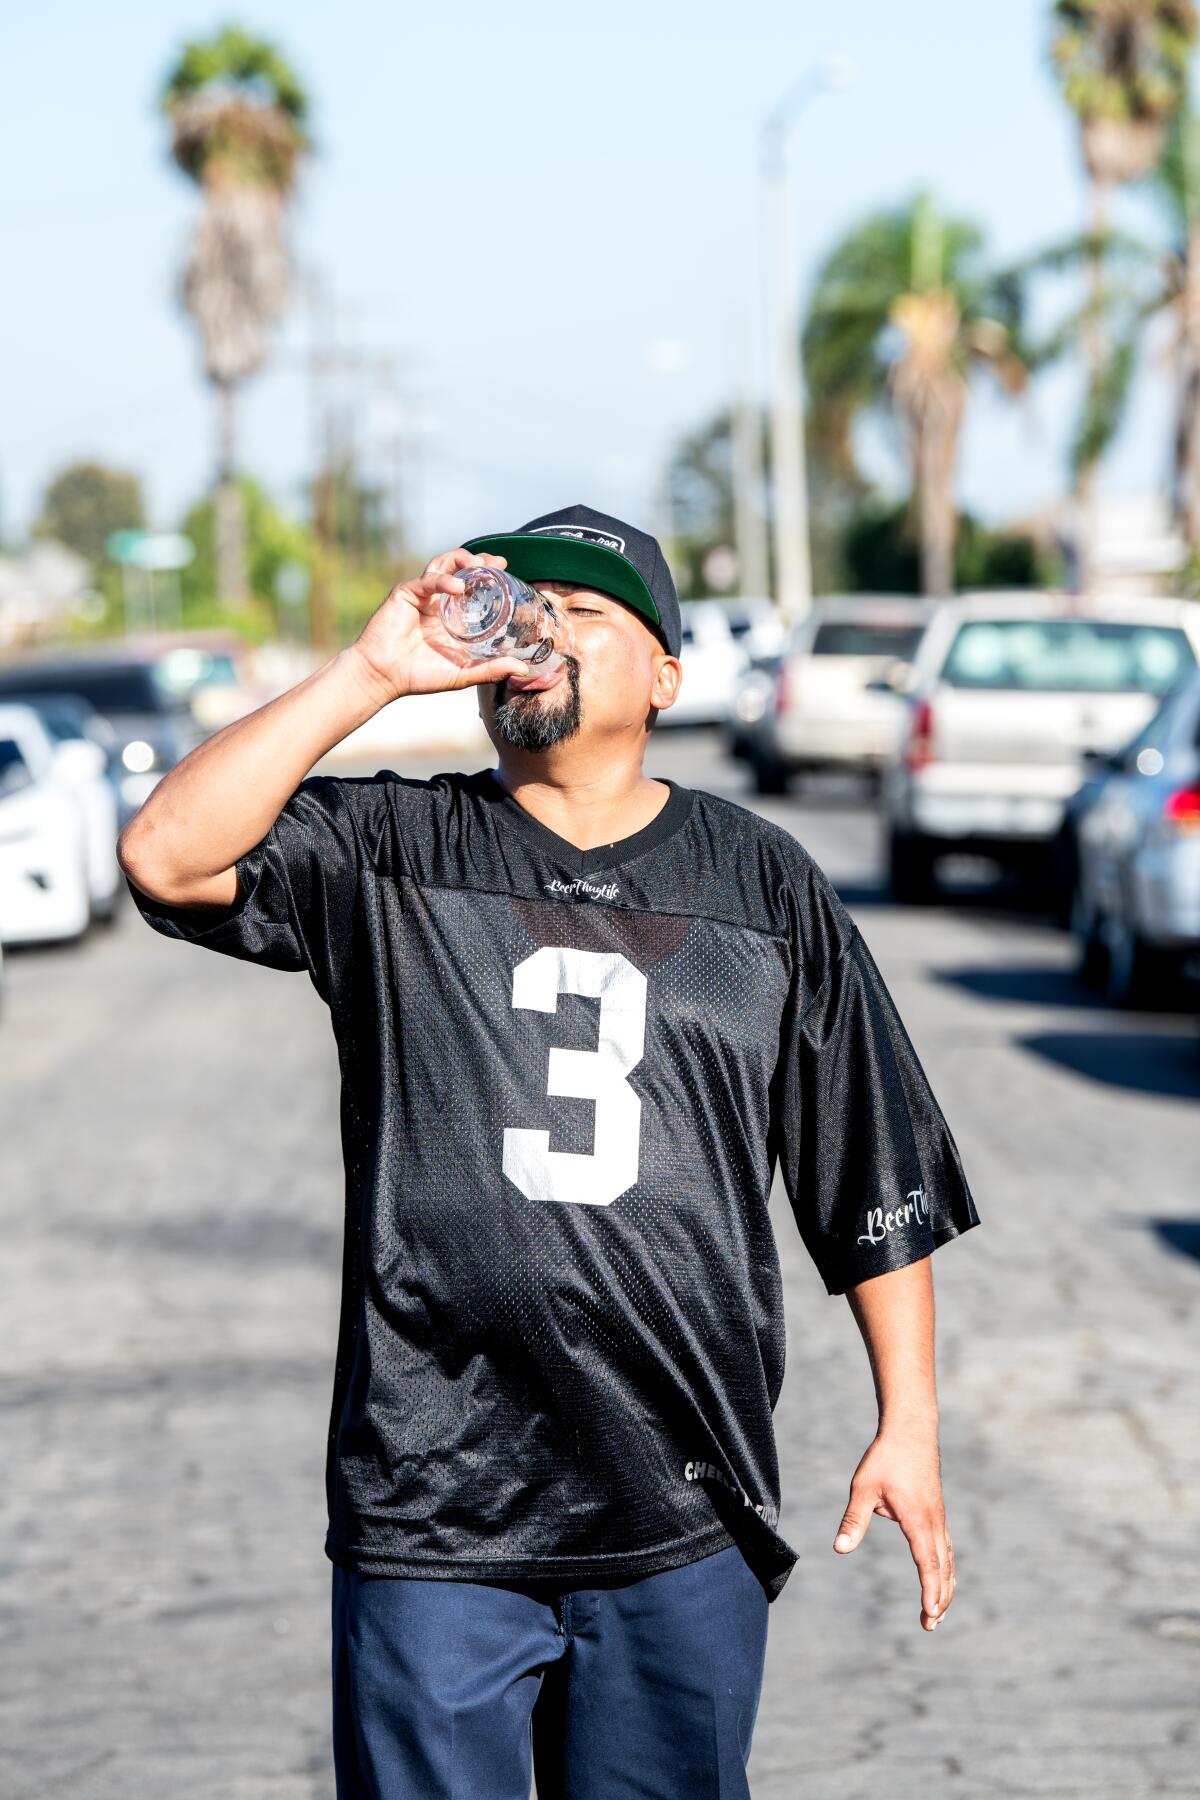 Edgar Preciado, wearing a black football jersey, downs a beer.